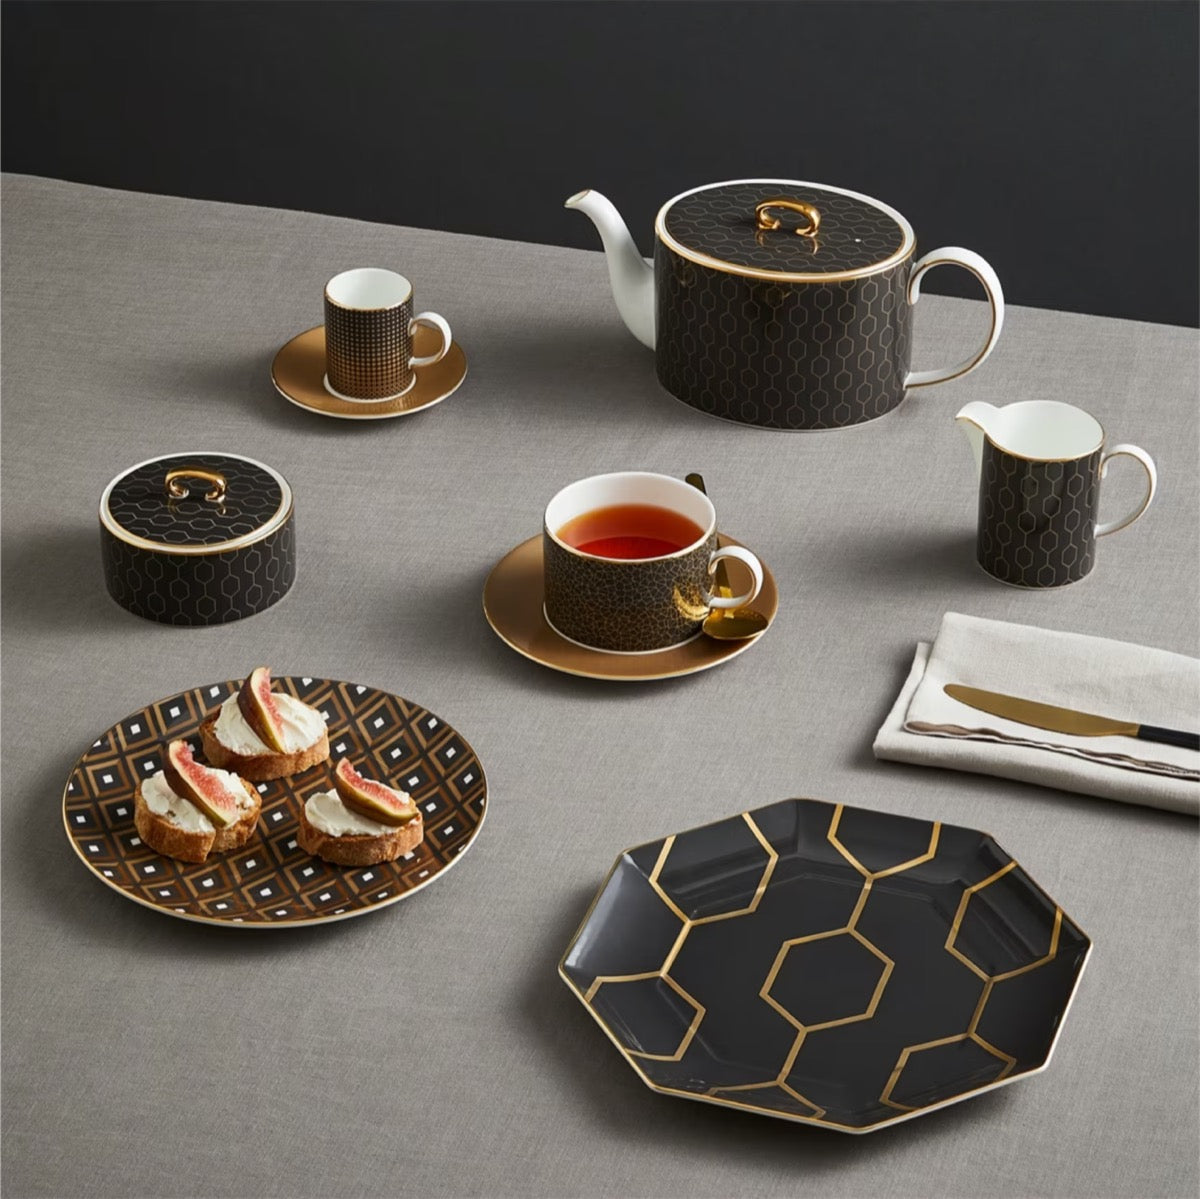 Wedgwood gio gold honeycomb teacup and saucer set